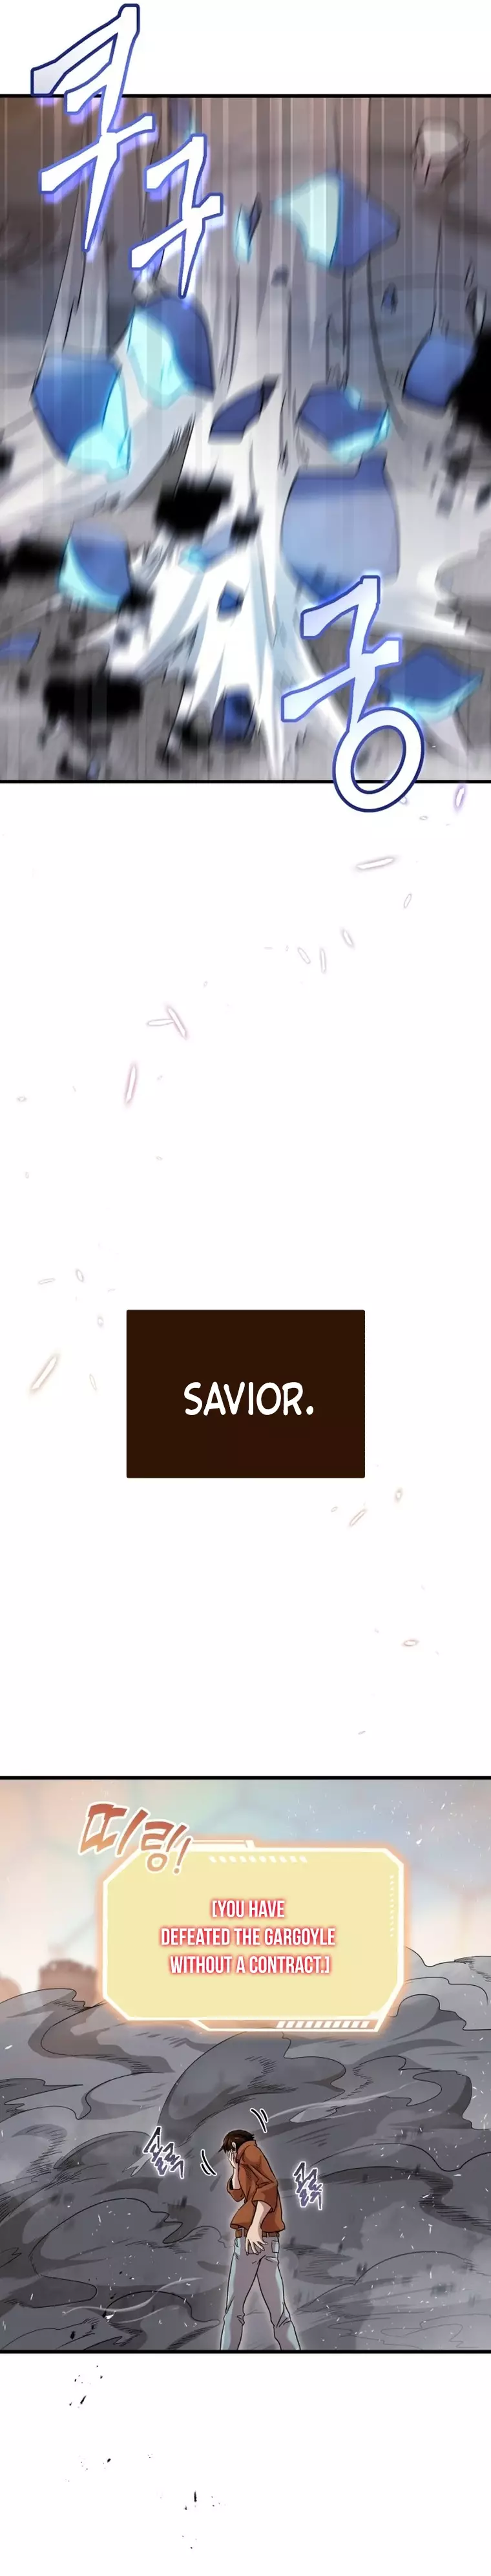 The Savior's Bucket List - 1 page 42-751aa76b